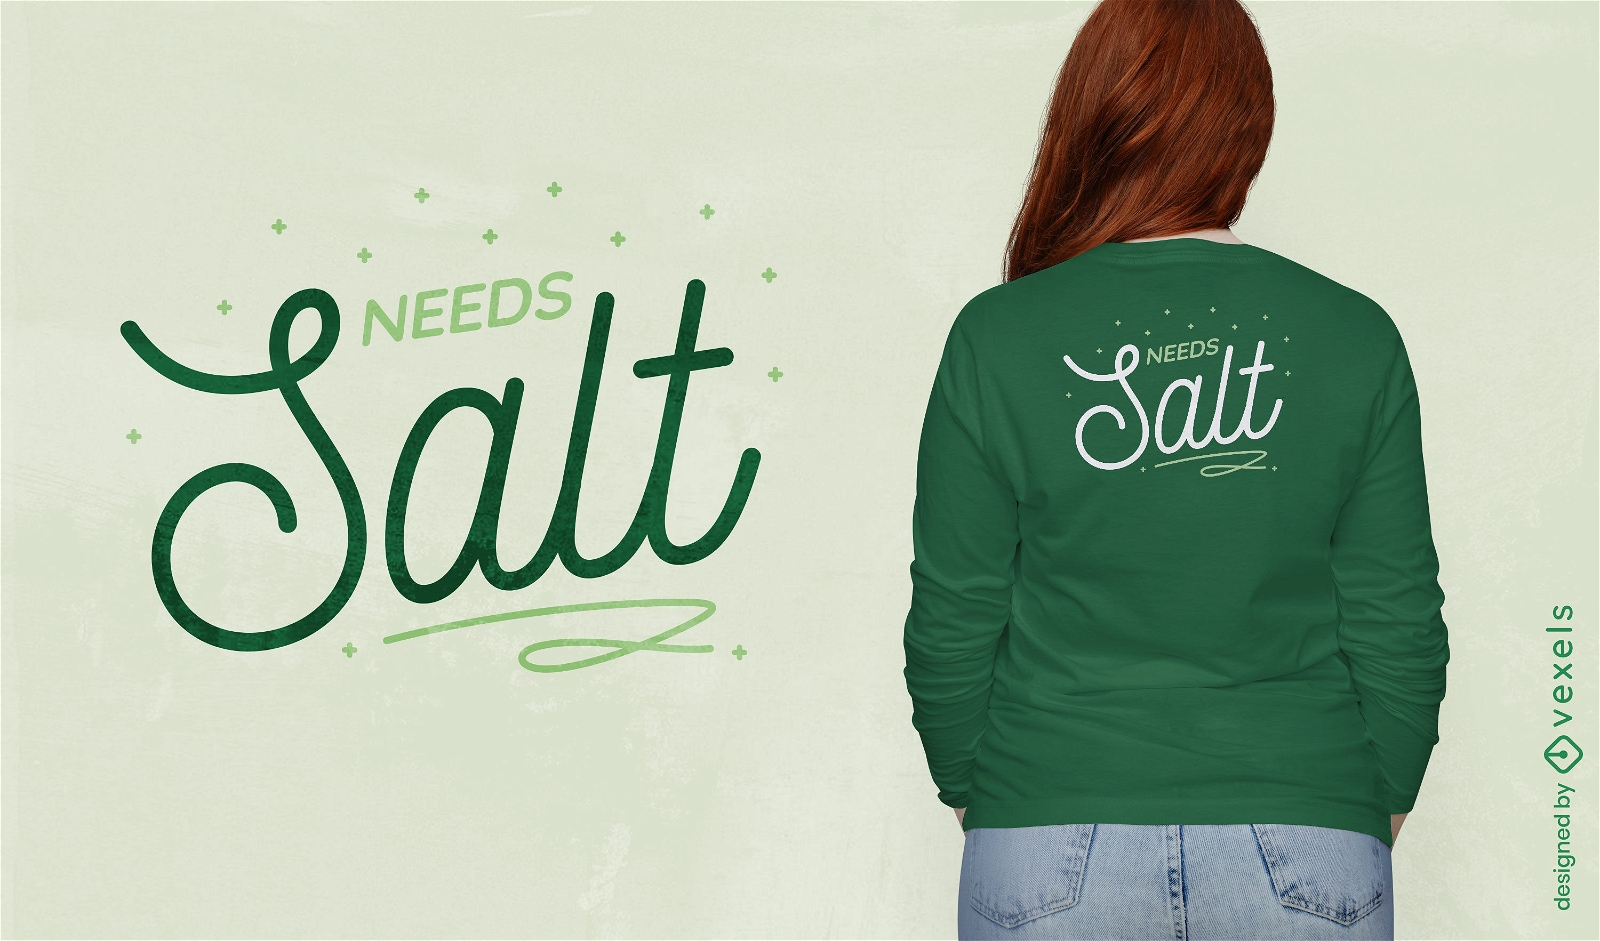 Benötigt Salz, das Zitat-T-Shirt-Design kocht